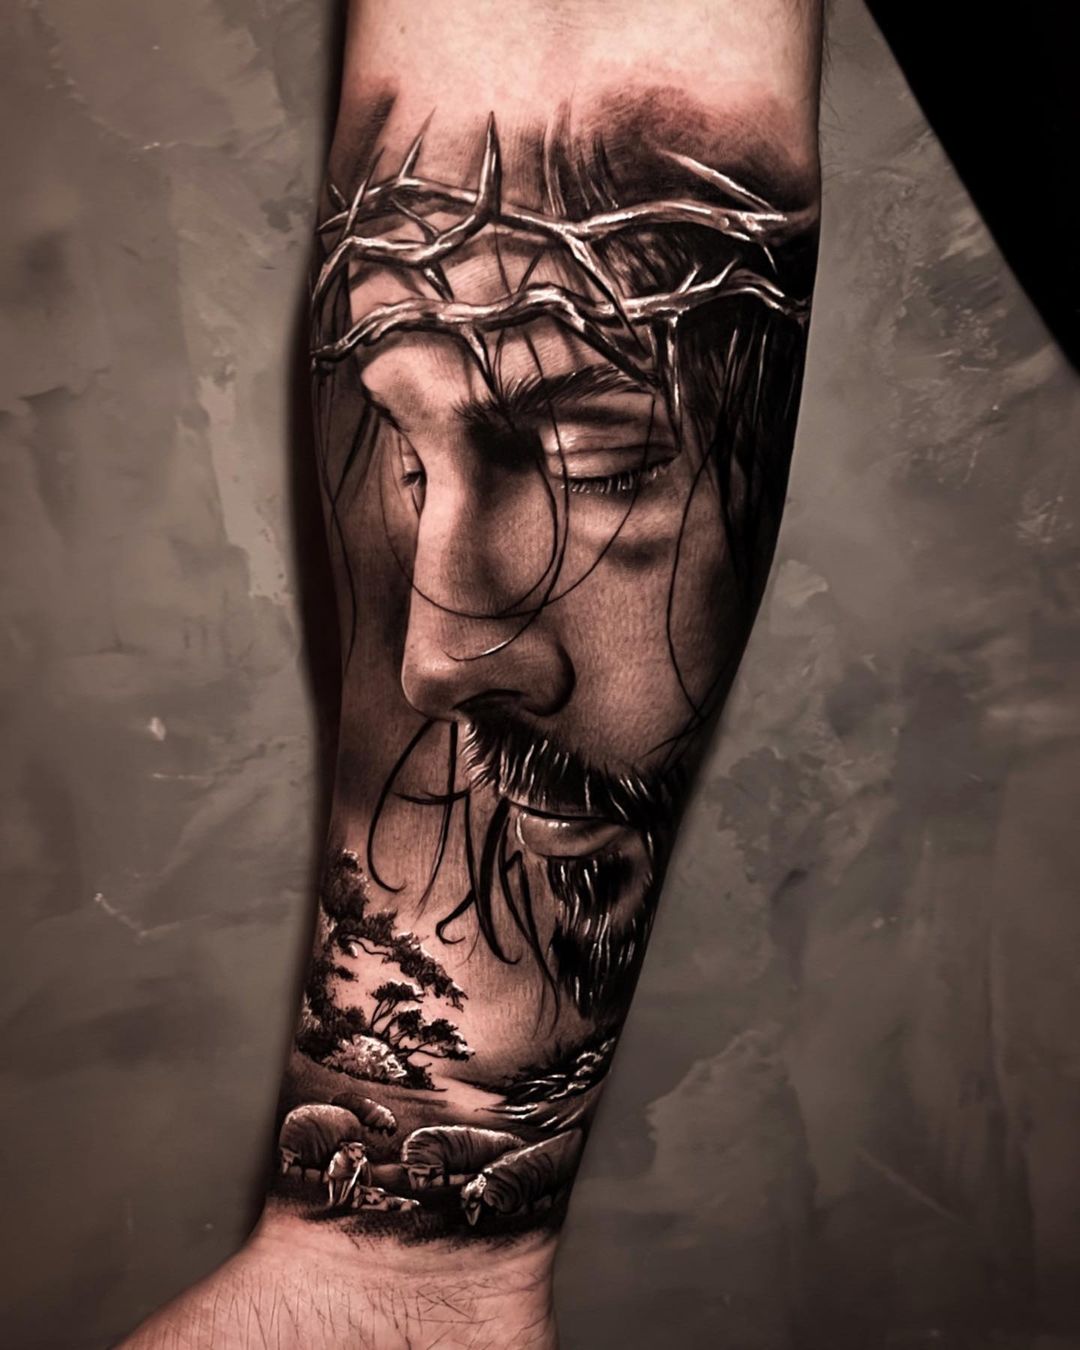 Jesus tattoo on arm by